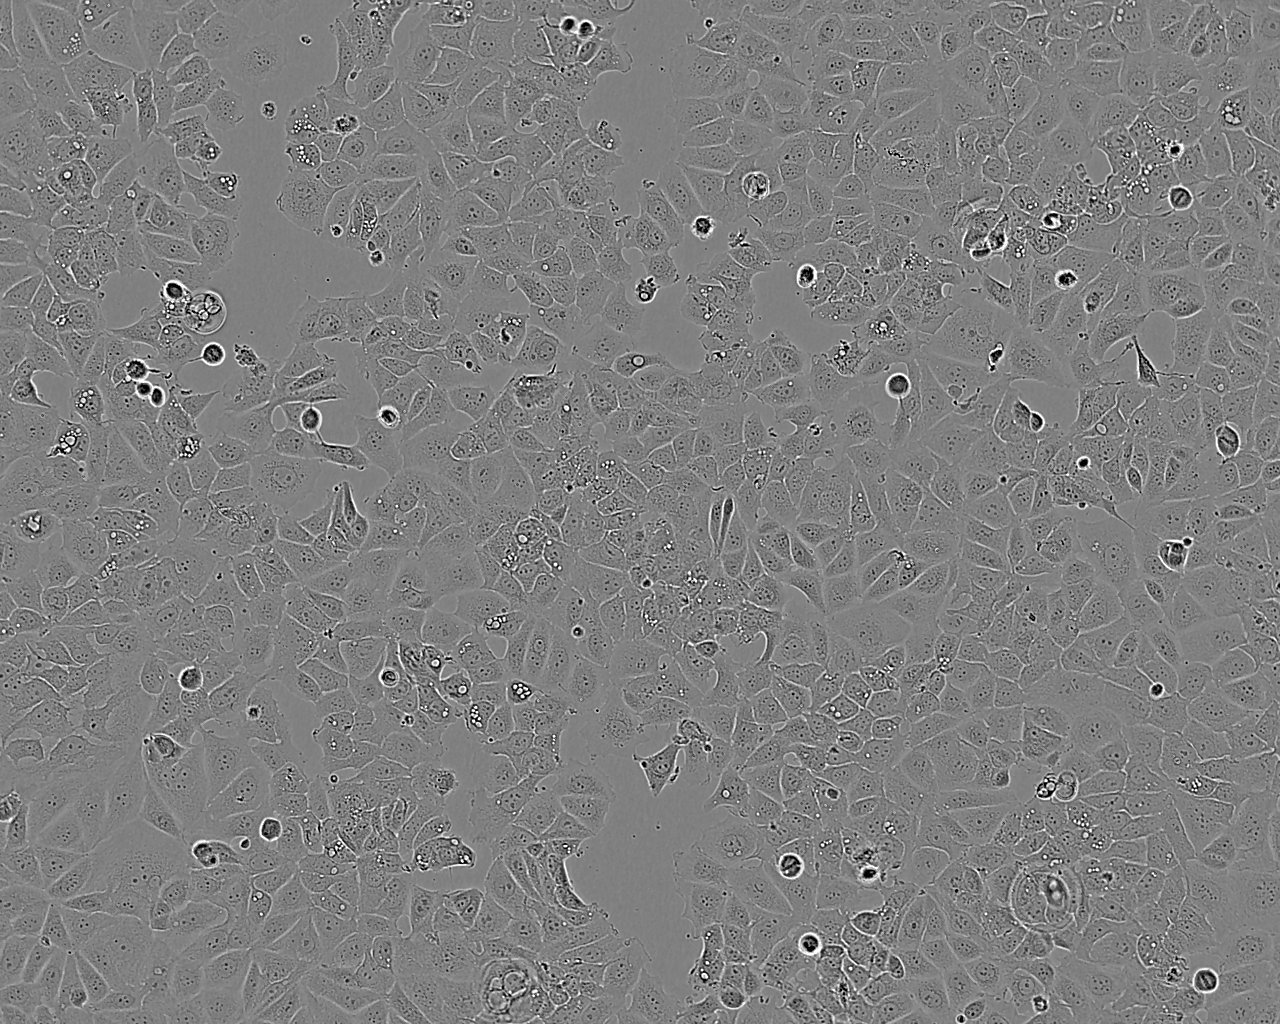 ELD-1 cell line人朗格汉斯细胞型树突状细胞系